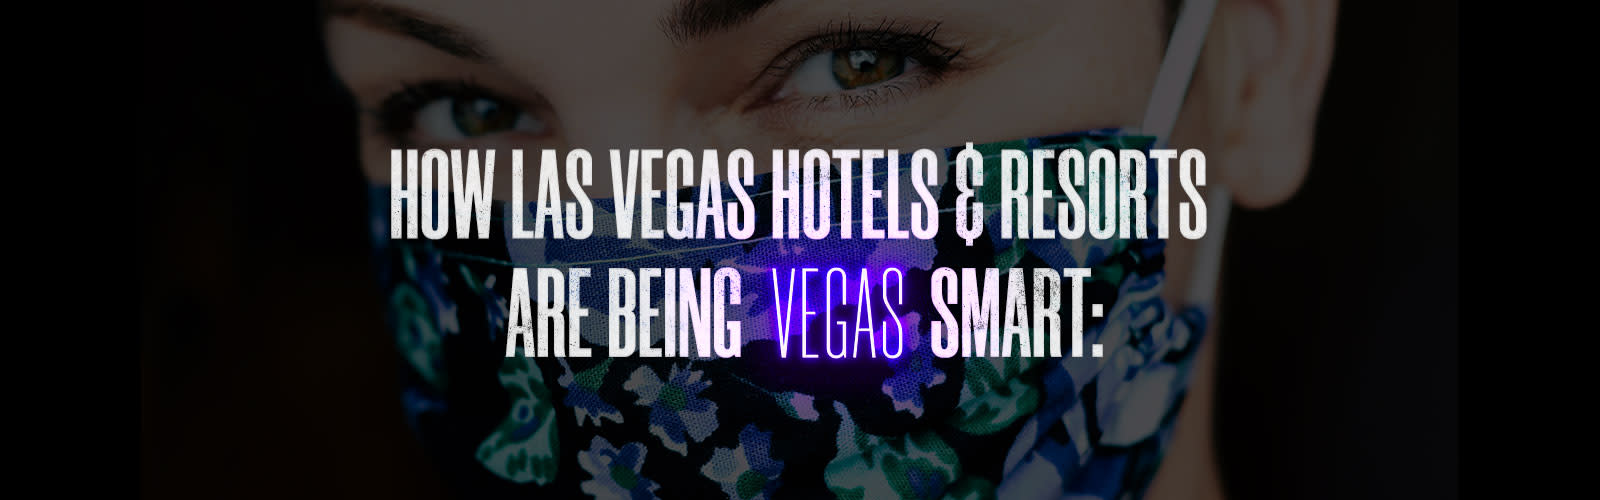 How Las Vegas Hotels & Resorts Are Being Vegas Smart: